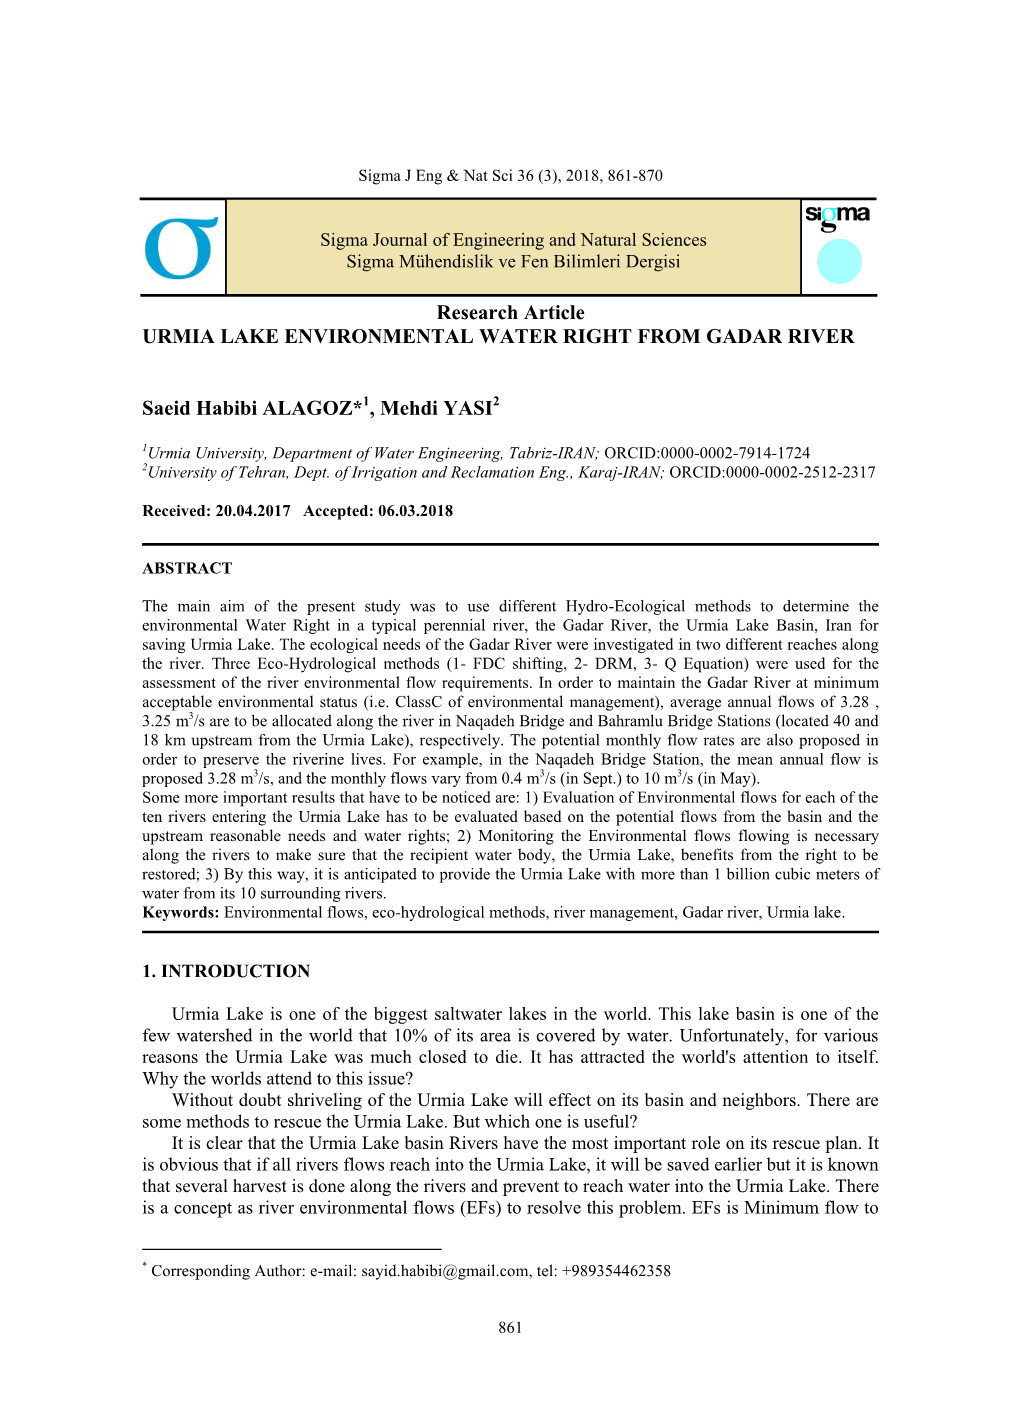 Research Article URMIA LAKE ENVIRONMENTAL WATER RIGHT from GADAR RIVER Saeid Habibi ALAGOZ*1, Mehdi YASI2